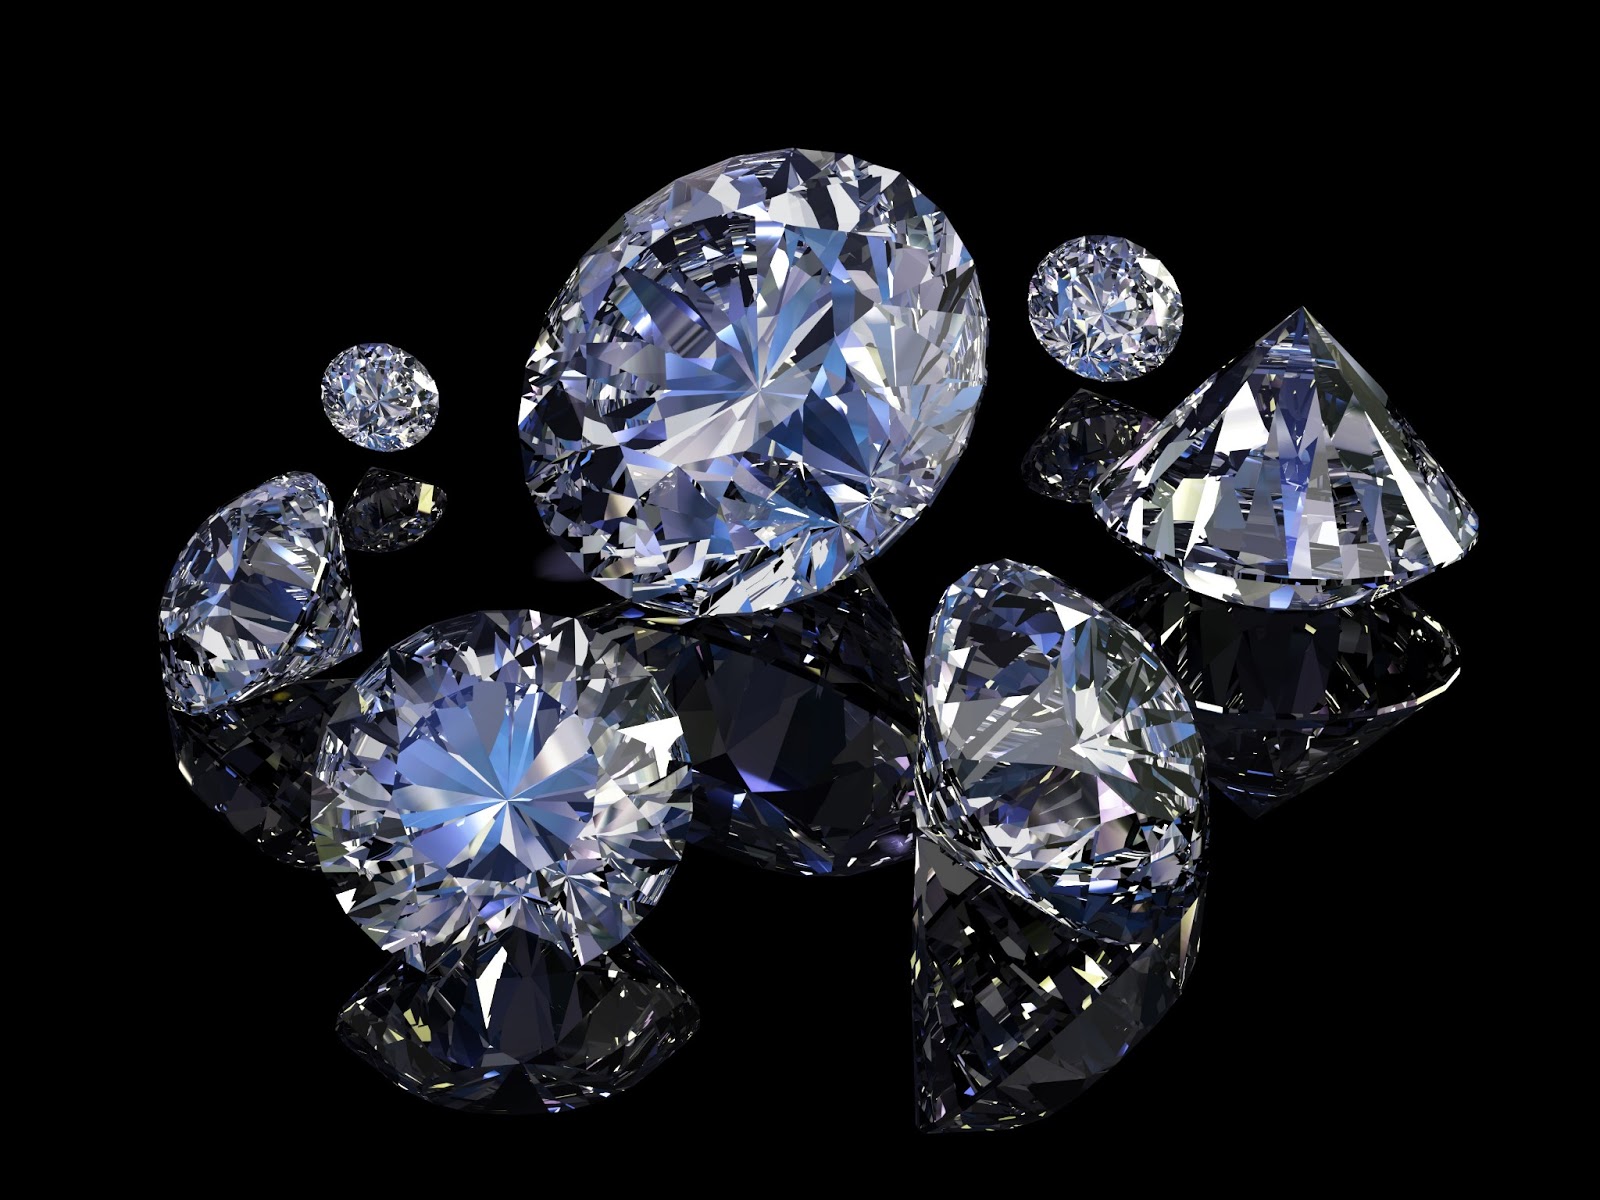 A group of diamonds on top - Diamond